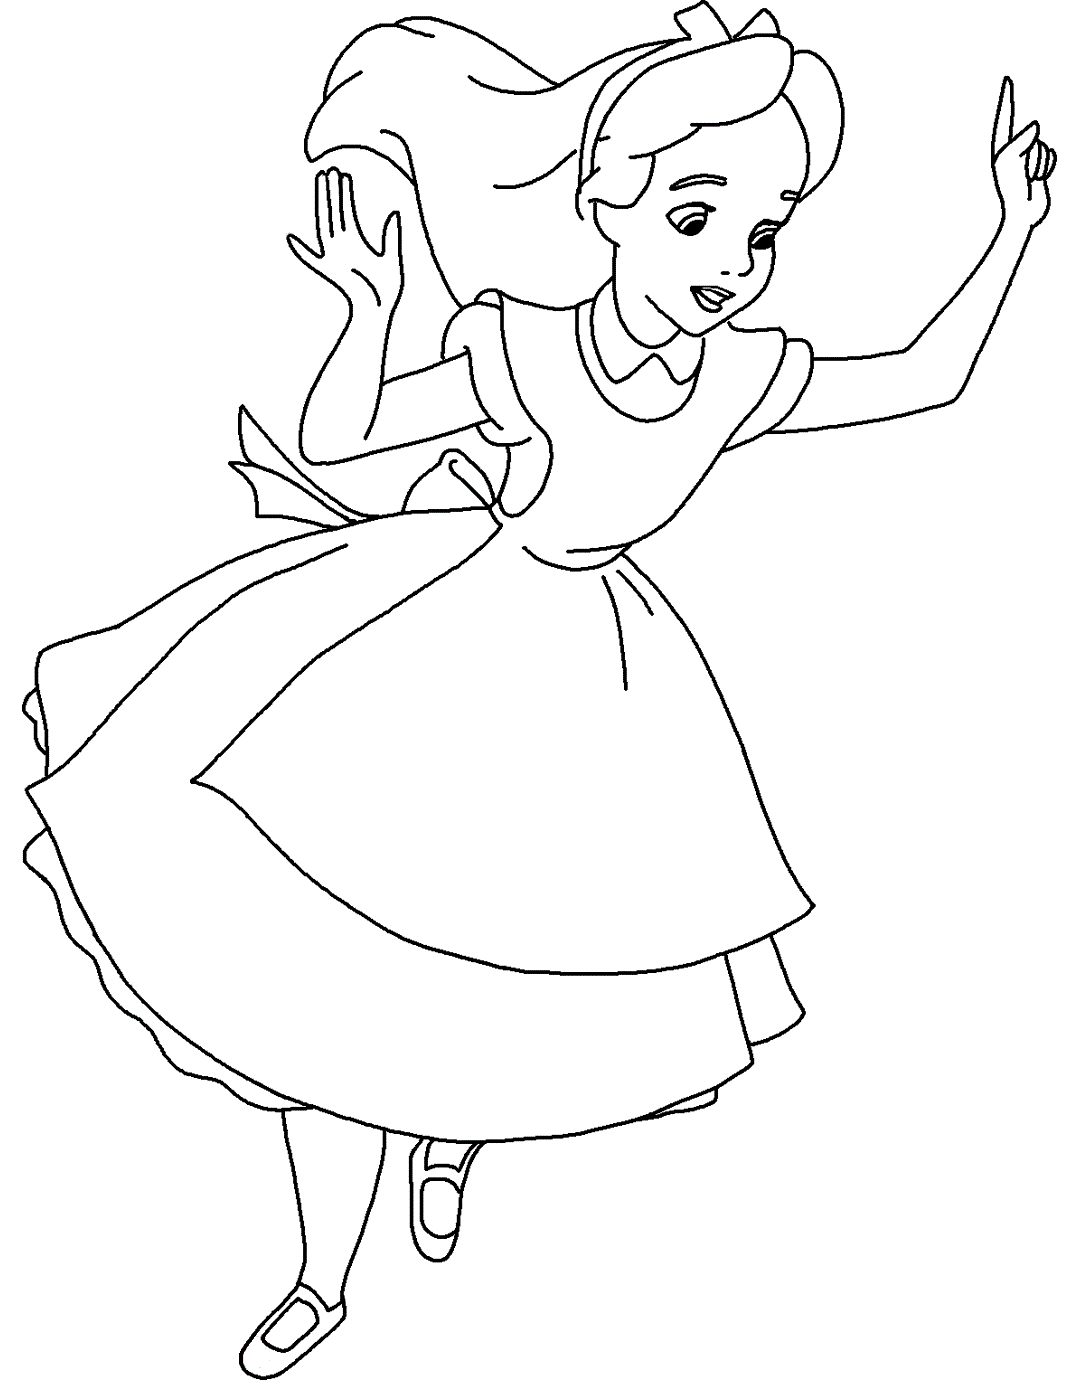 Alice in Wonderland Coloring Pages Cartoons 1574415224_1545727325_alicec1 Printable 2020 0345 Coloring4free